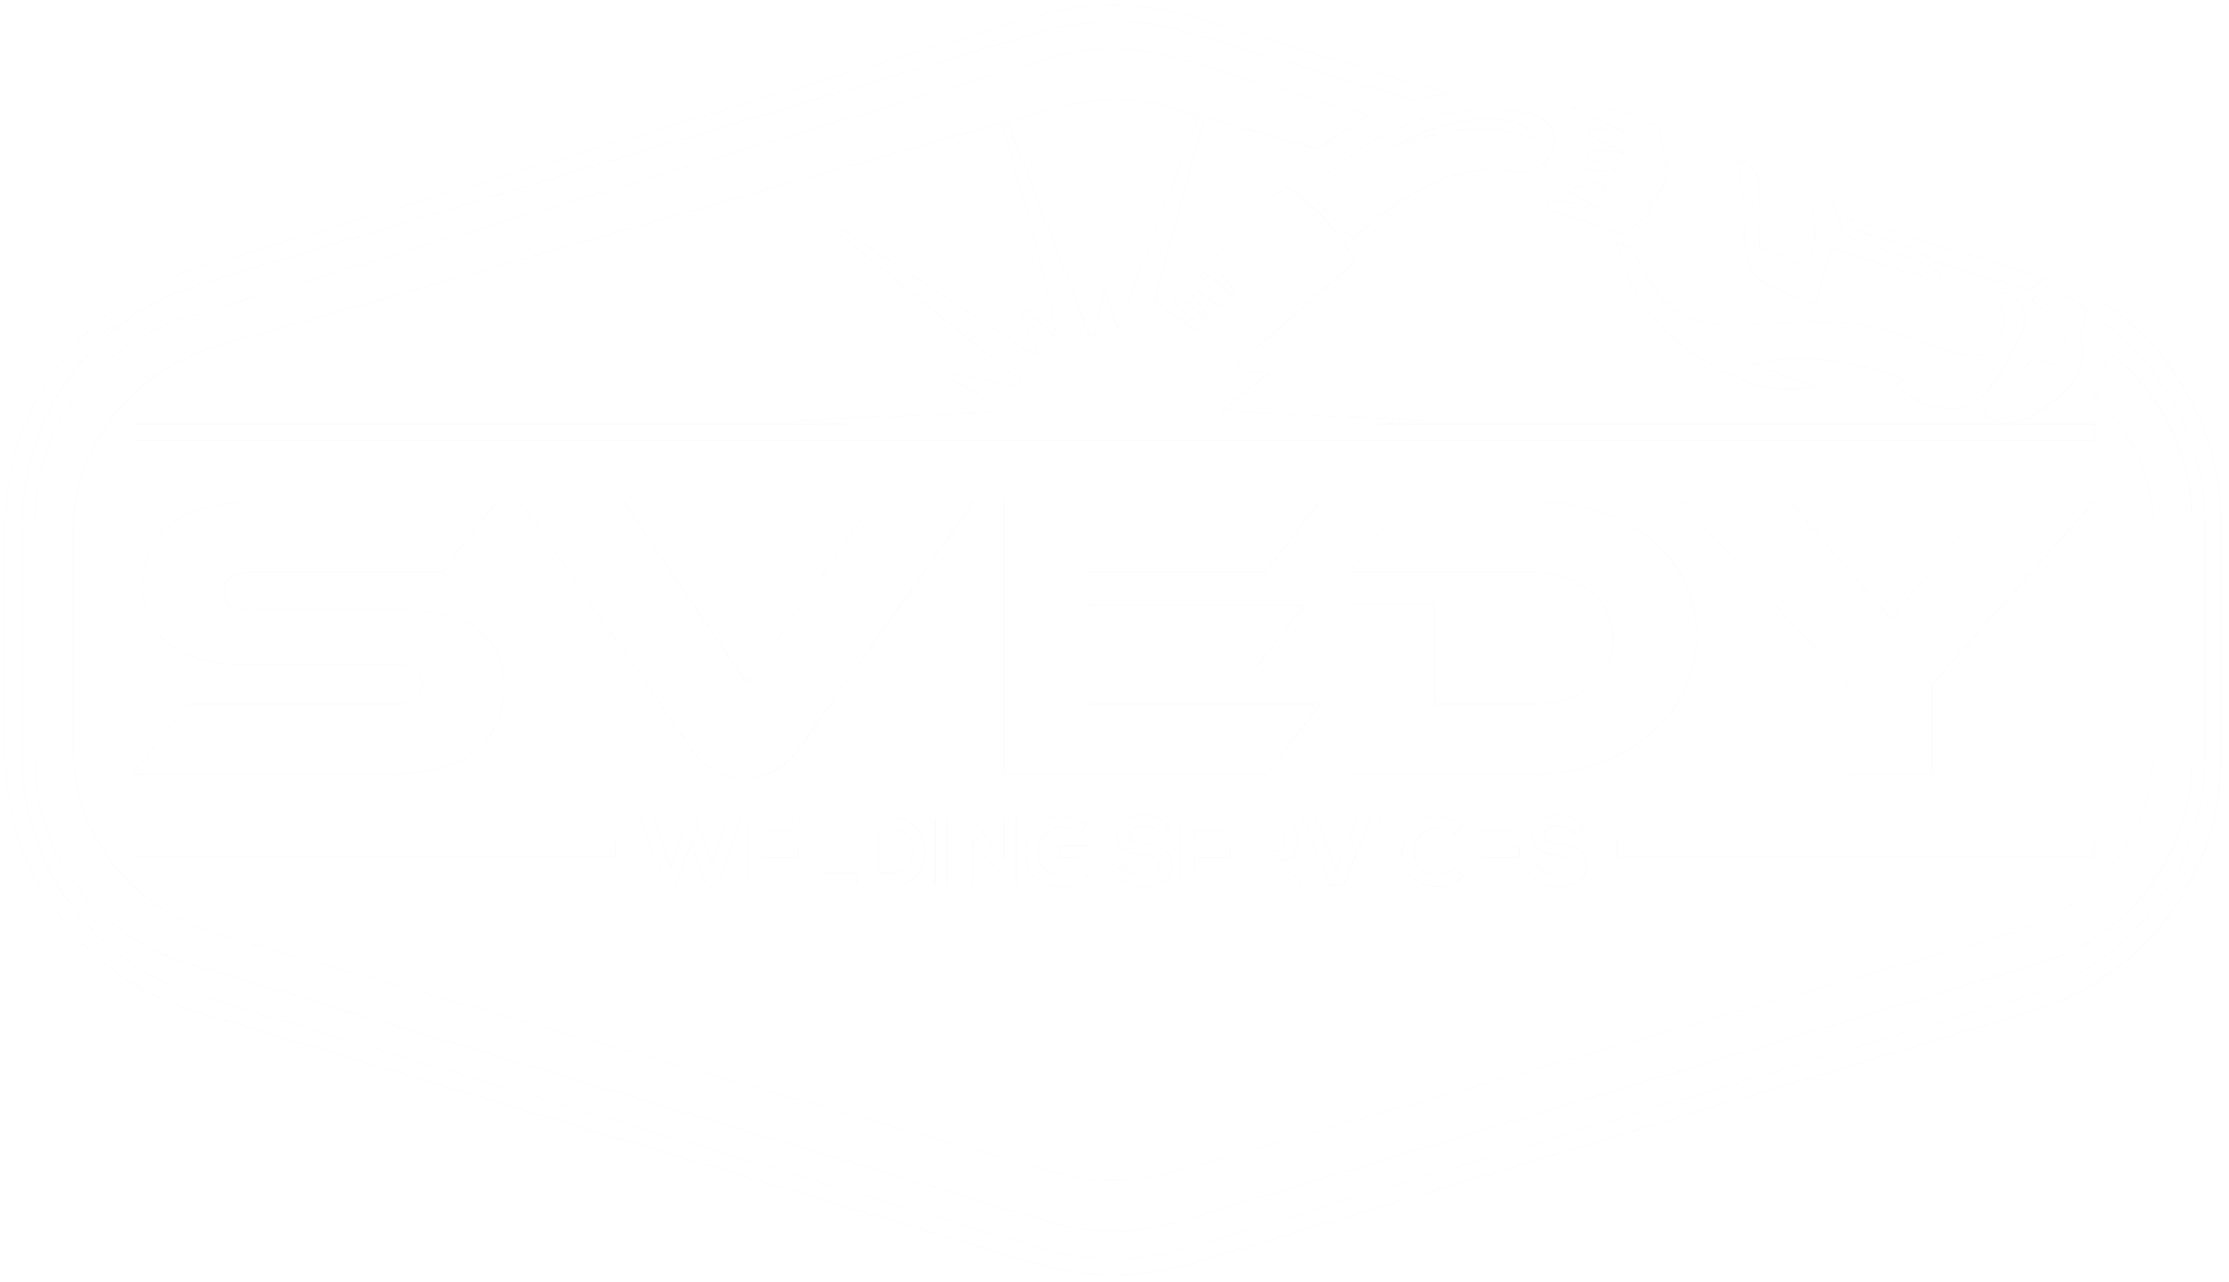 Svedy welding services